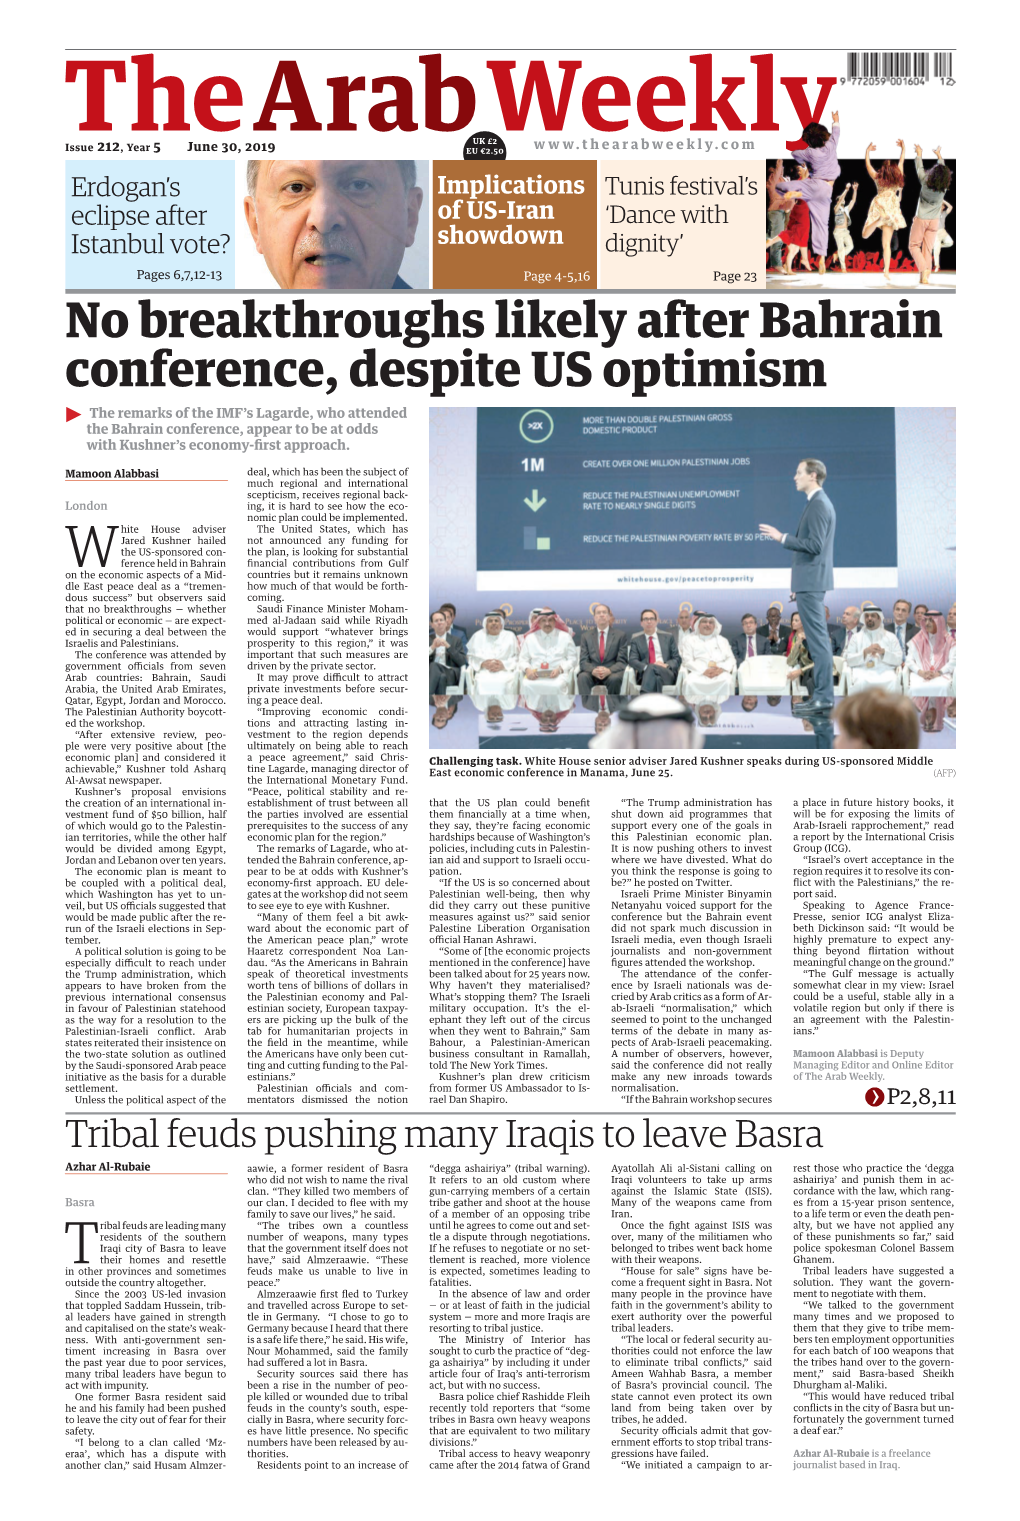 No Breakthroughs Likely After Bahrain Conference, Despite US Optimism